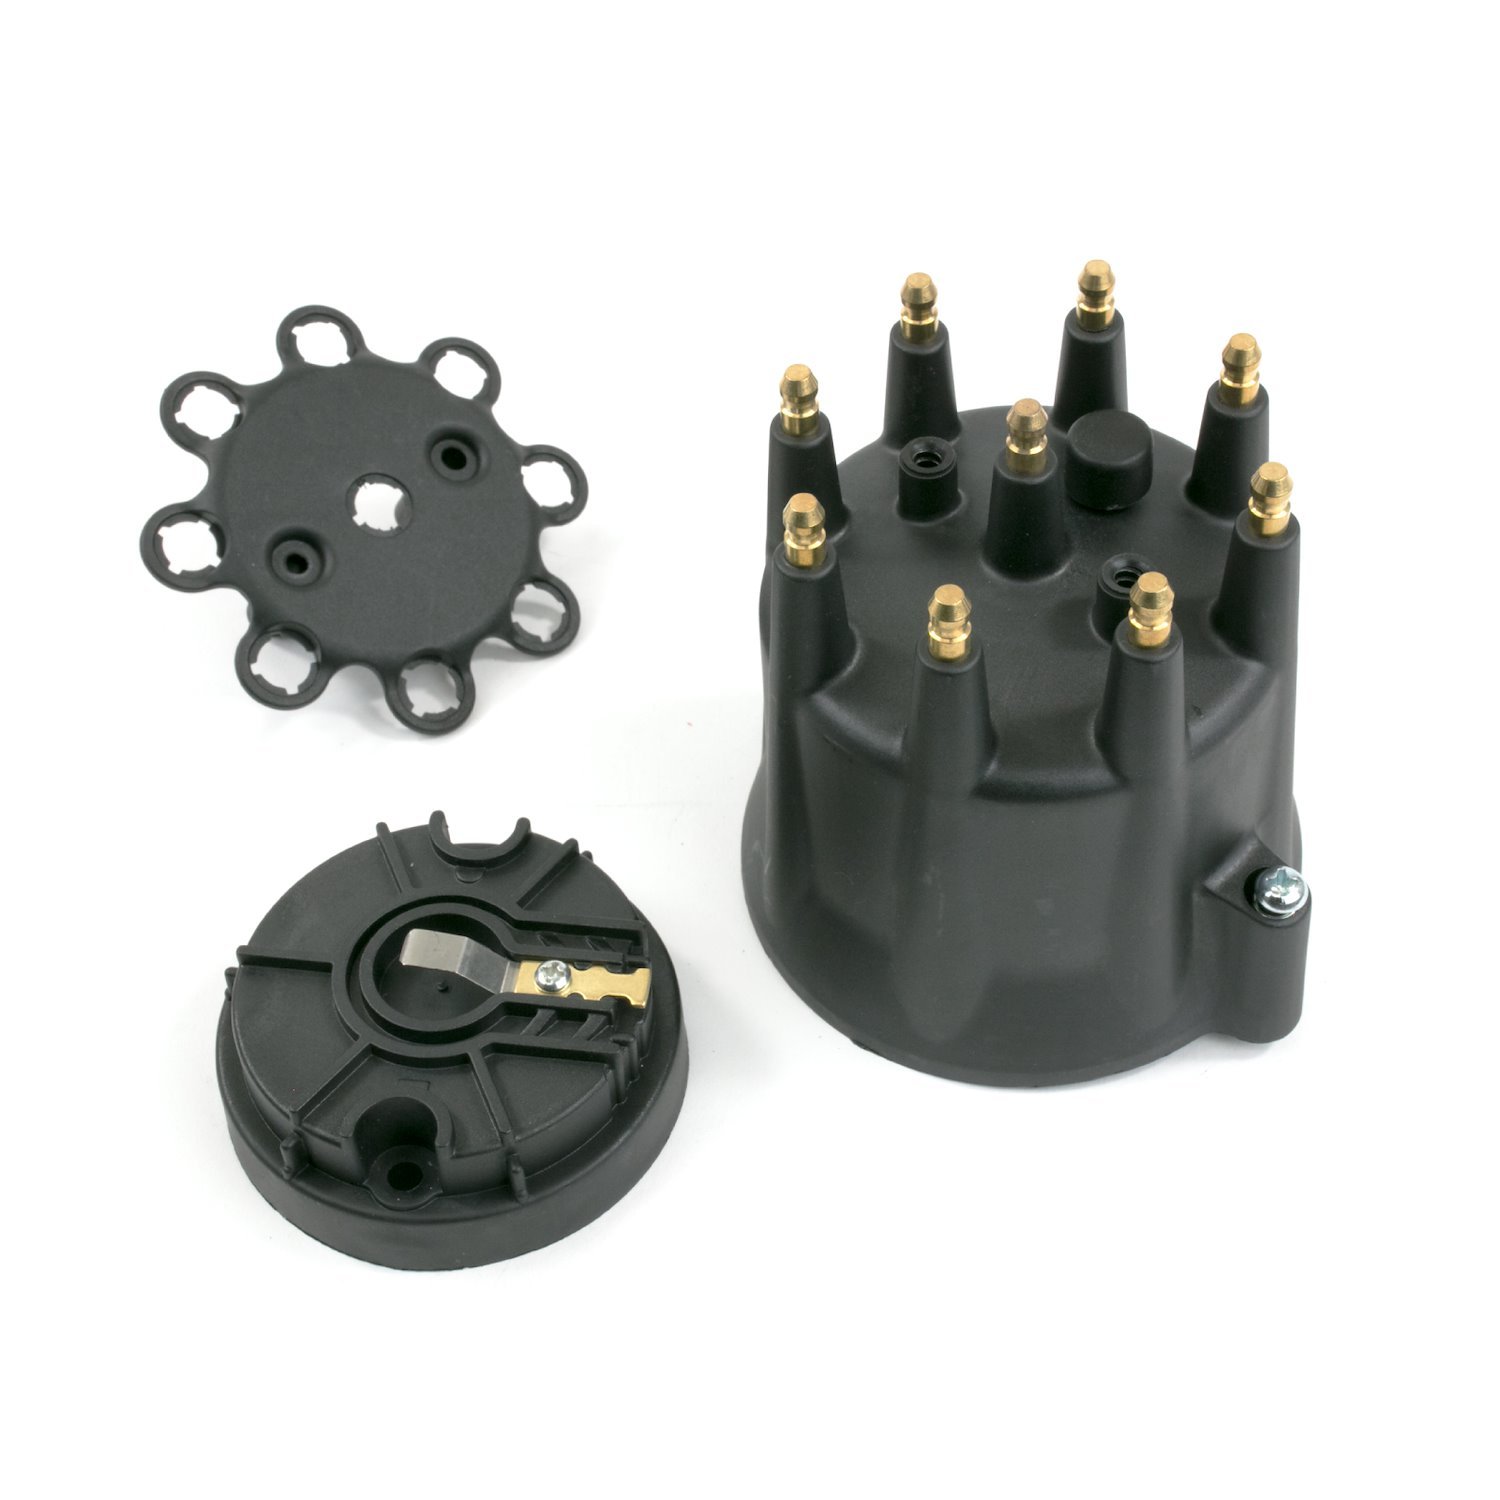 JM6973BK Pro Series Distributor Cap and Rotor Kit, 8 Cylinder Male, Black